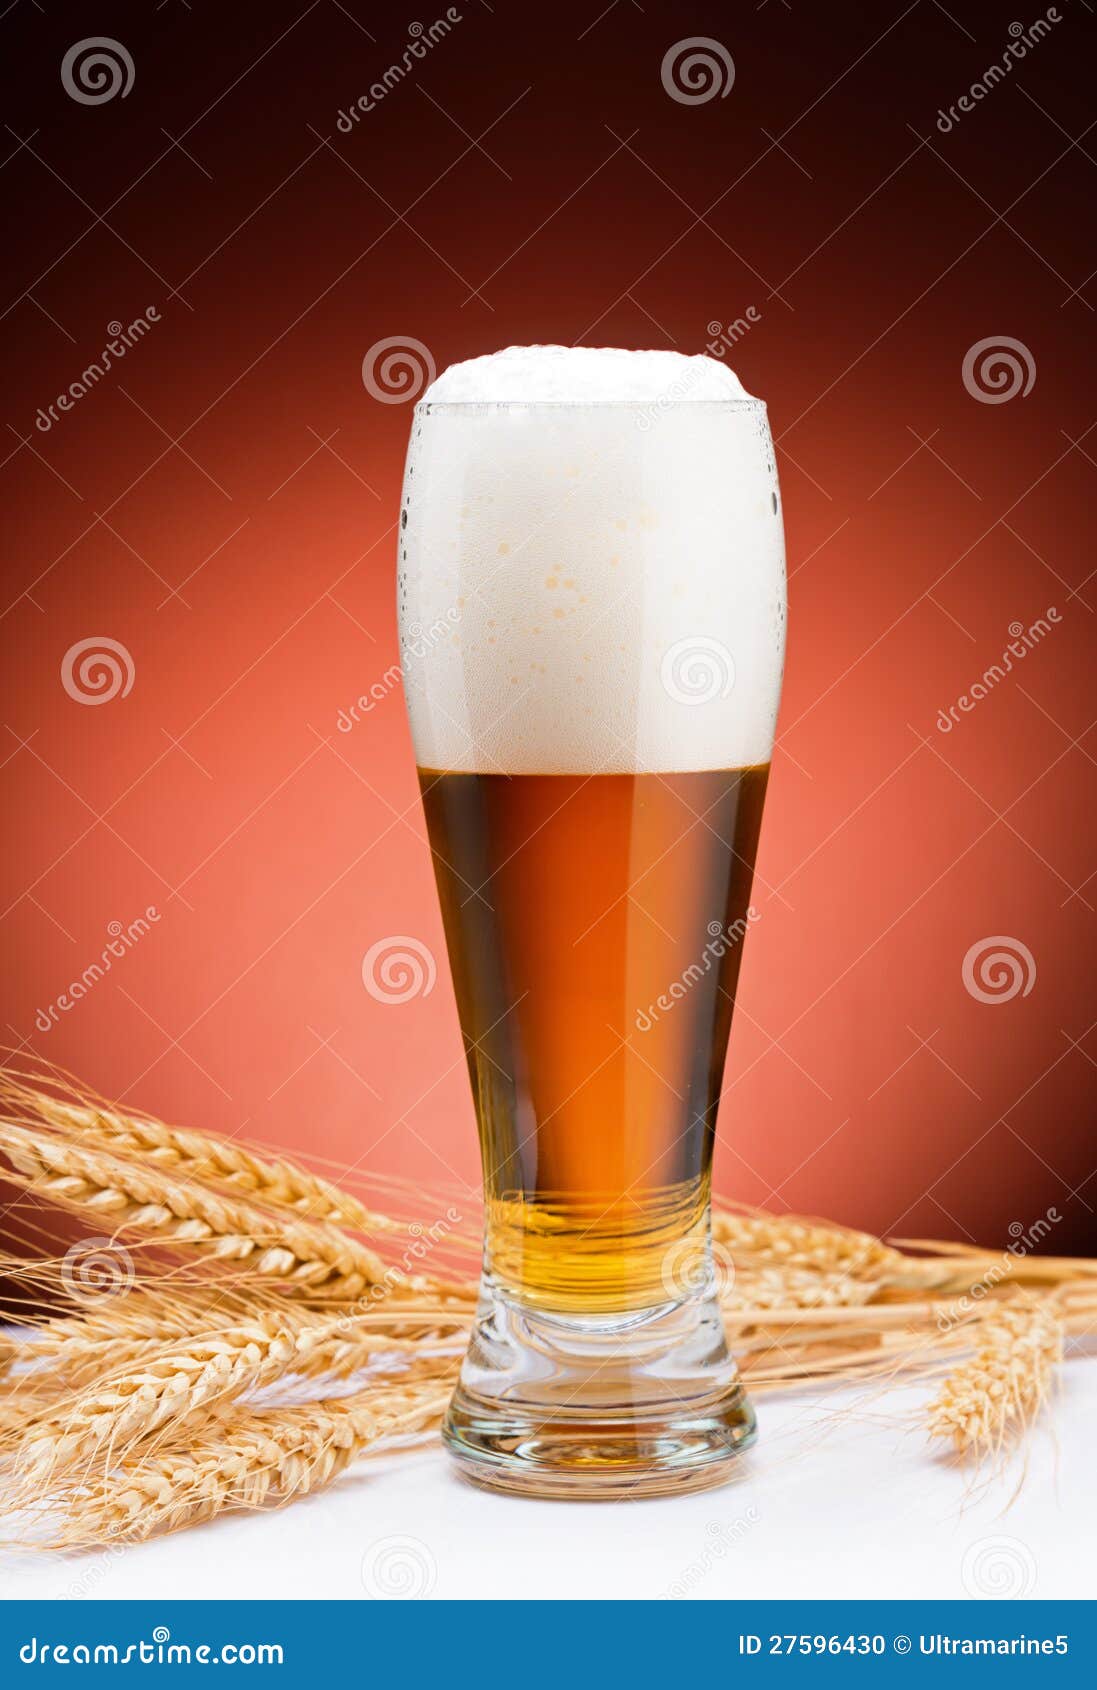 Beer and barley stock photo. Image of pint, corn, crop - 27596430